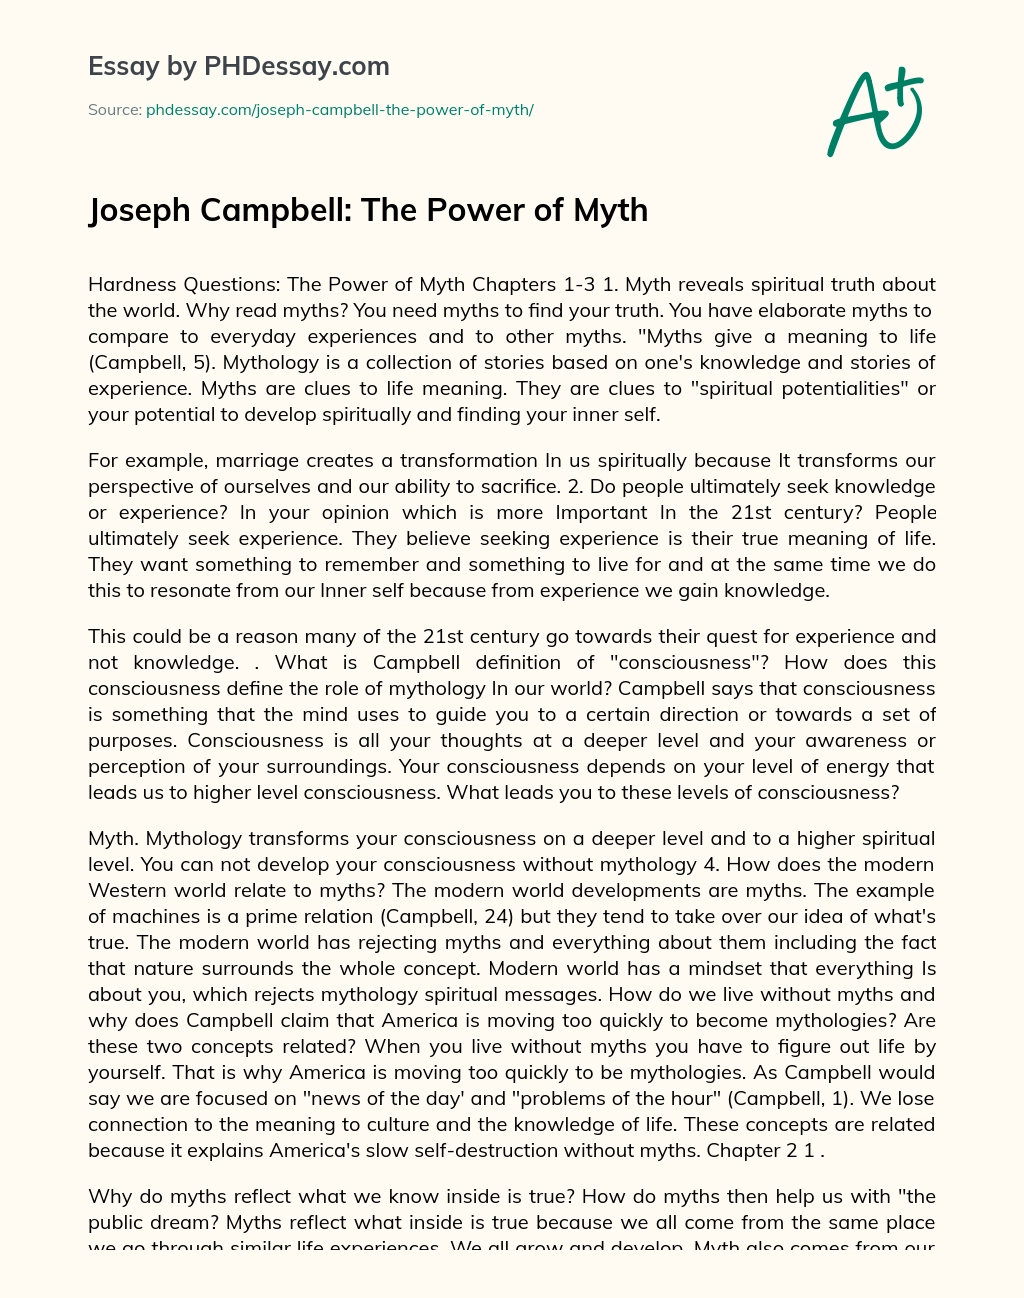 Joseph Campbell: The Power of Myth essay